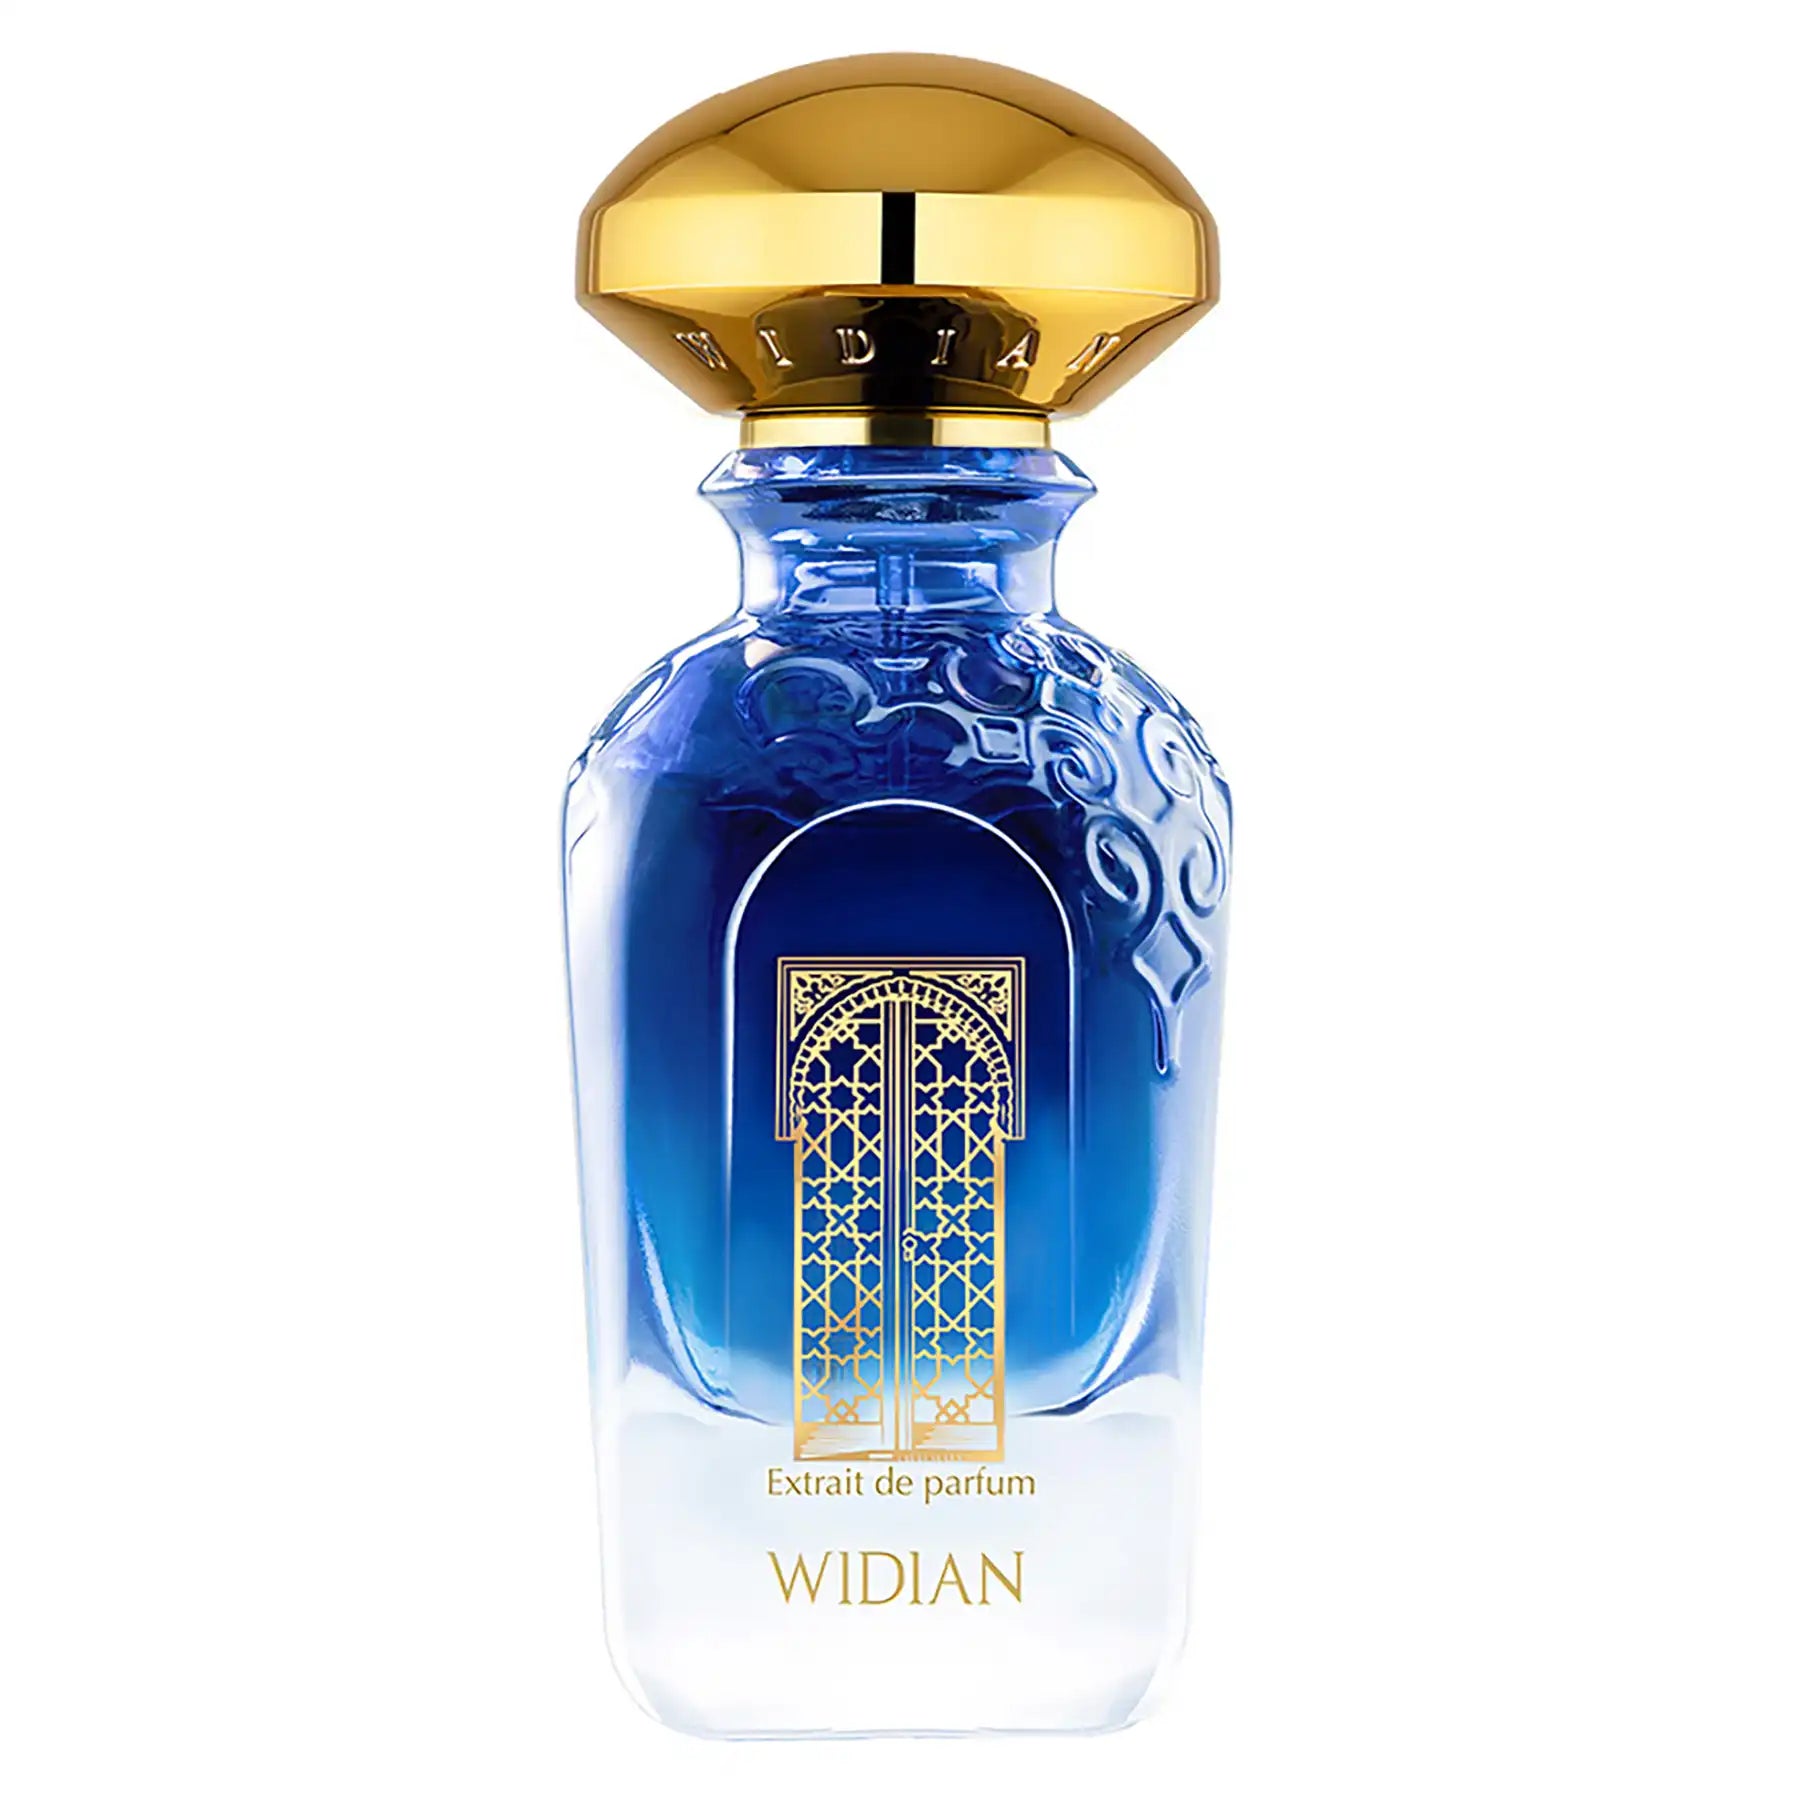 Widian Granada Extrait de Parfum 50ML